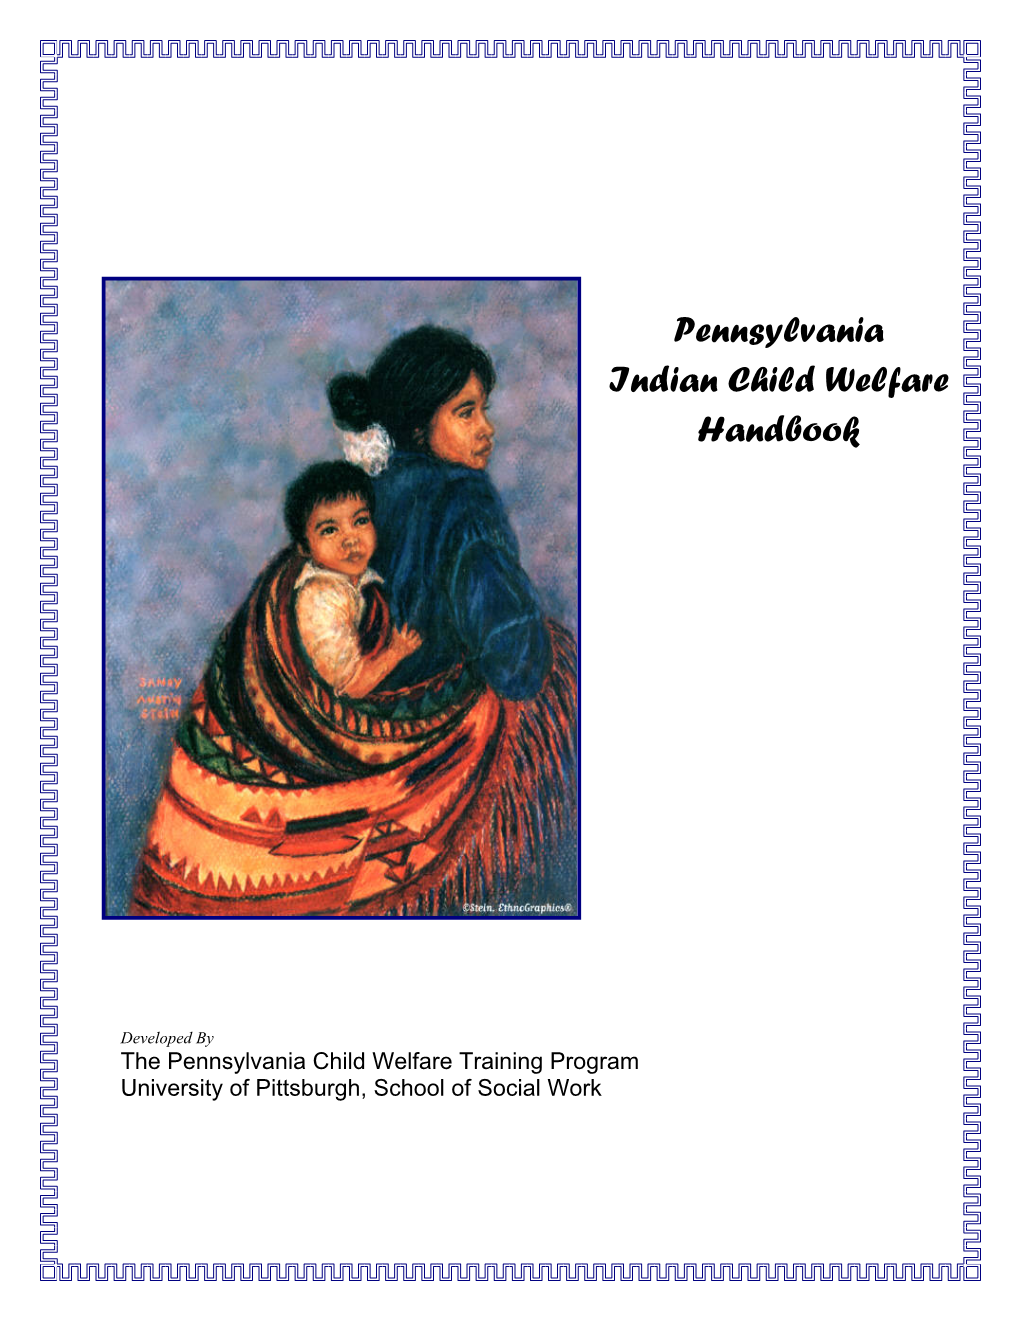 Pennsylvania Indian Child Welfare Handbook